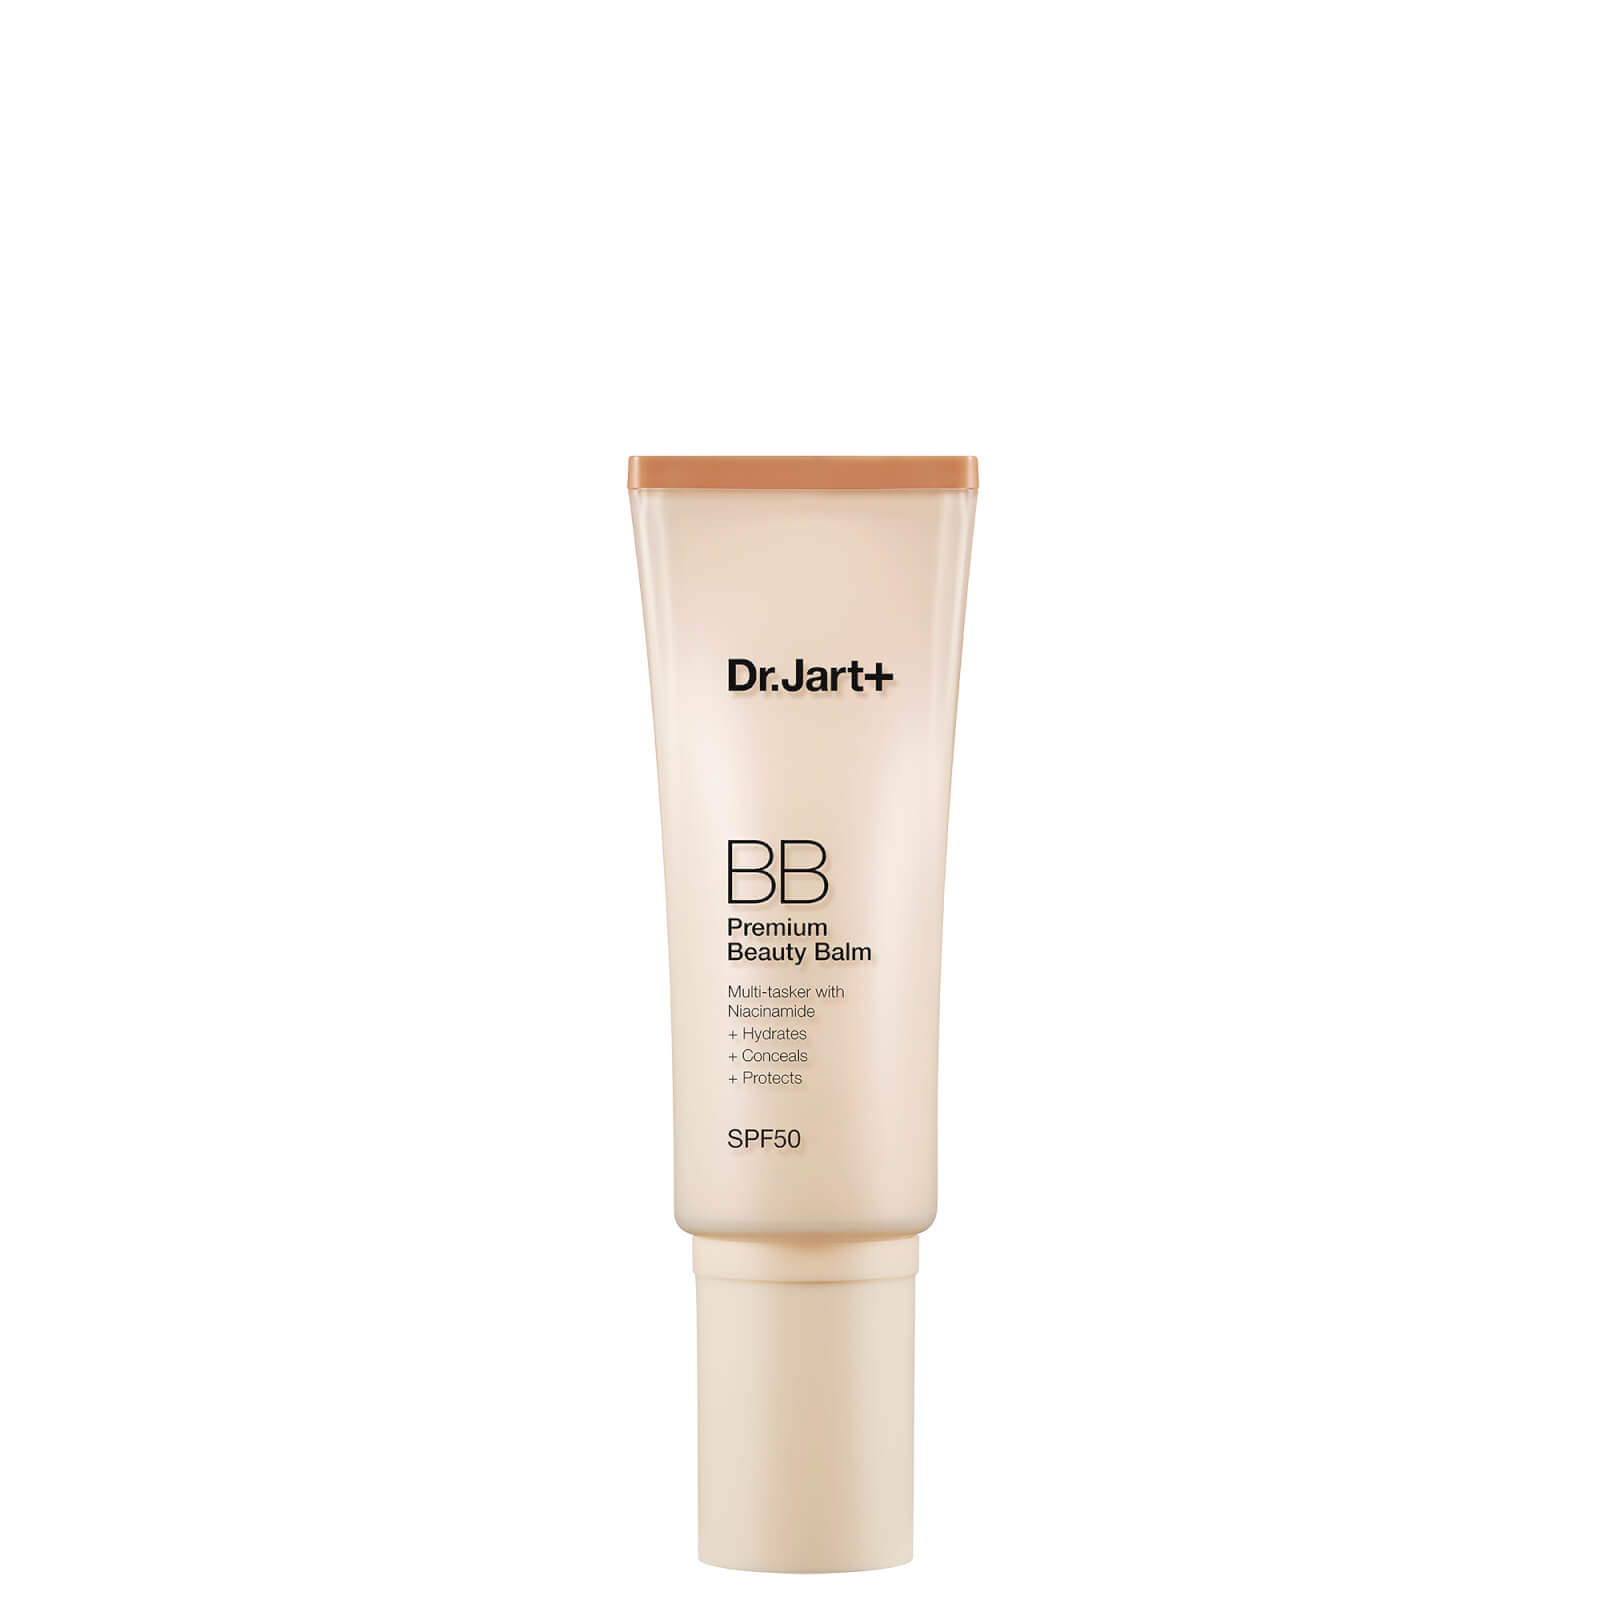 Dr.Jart+ Premium BB Beauty Balm SPF 50 40ml (Various Shades) - 03 MEDIUM - TAN